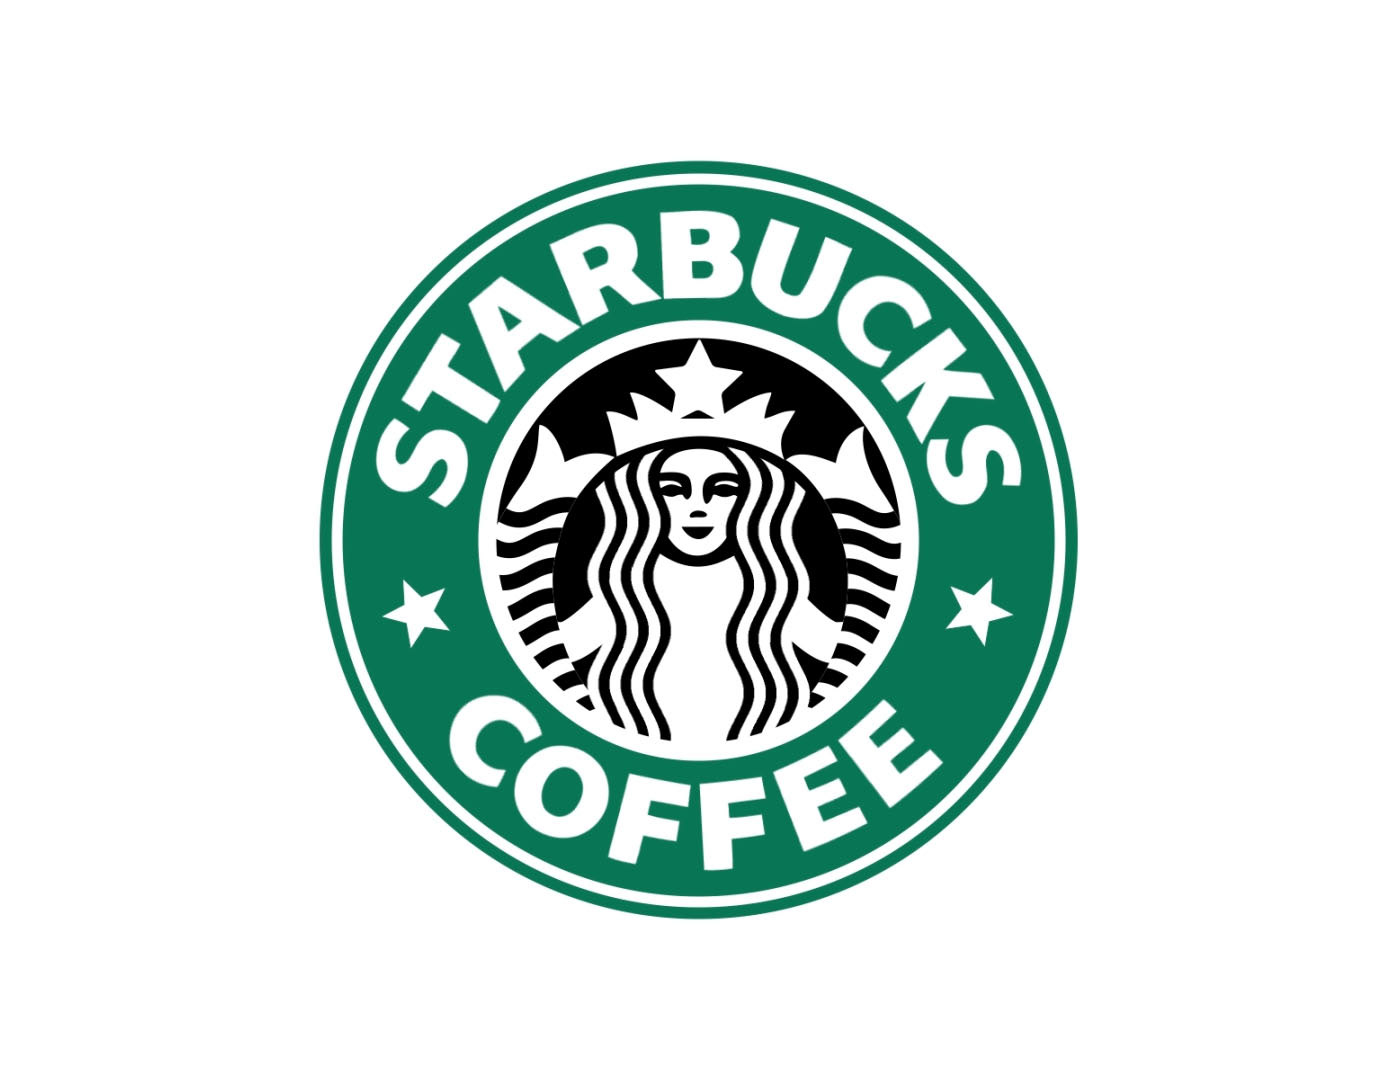 aftereffects brands Coffee logoanimation Logomotion logos motiongraphics starbucks